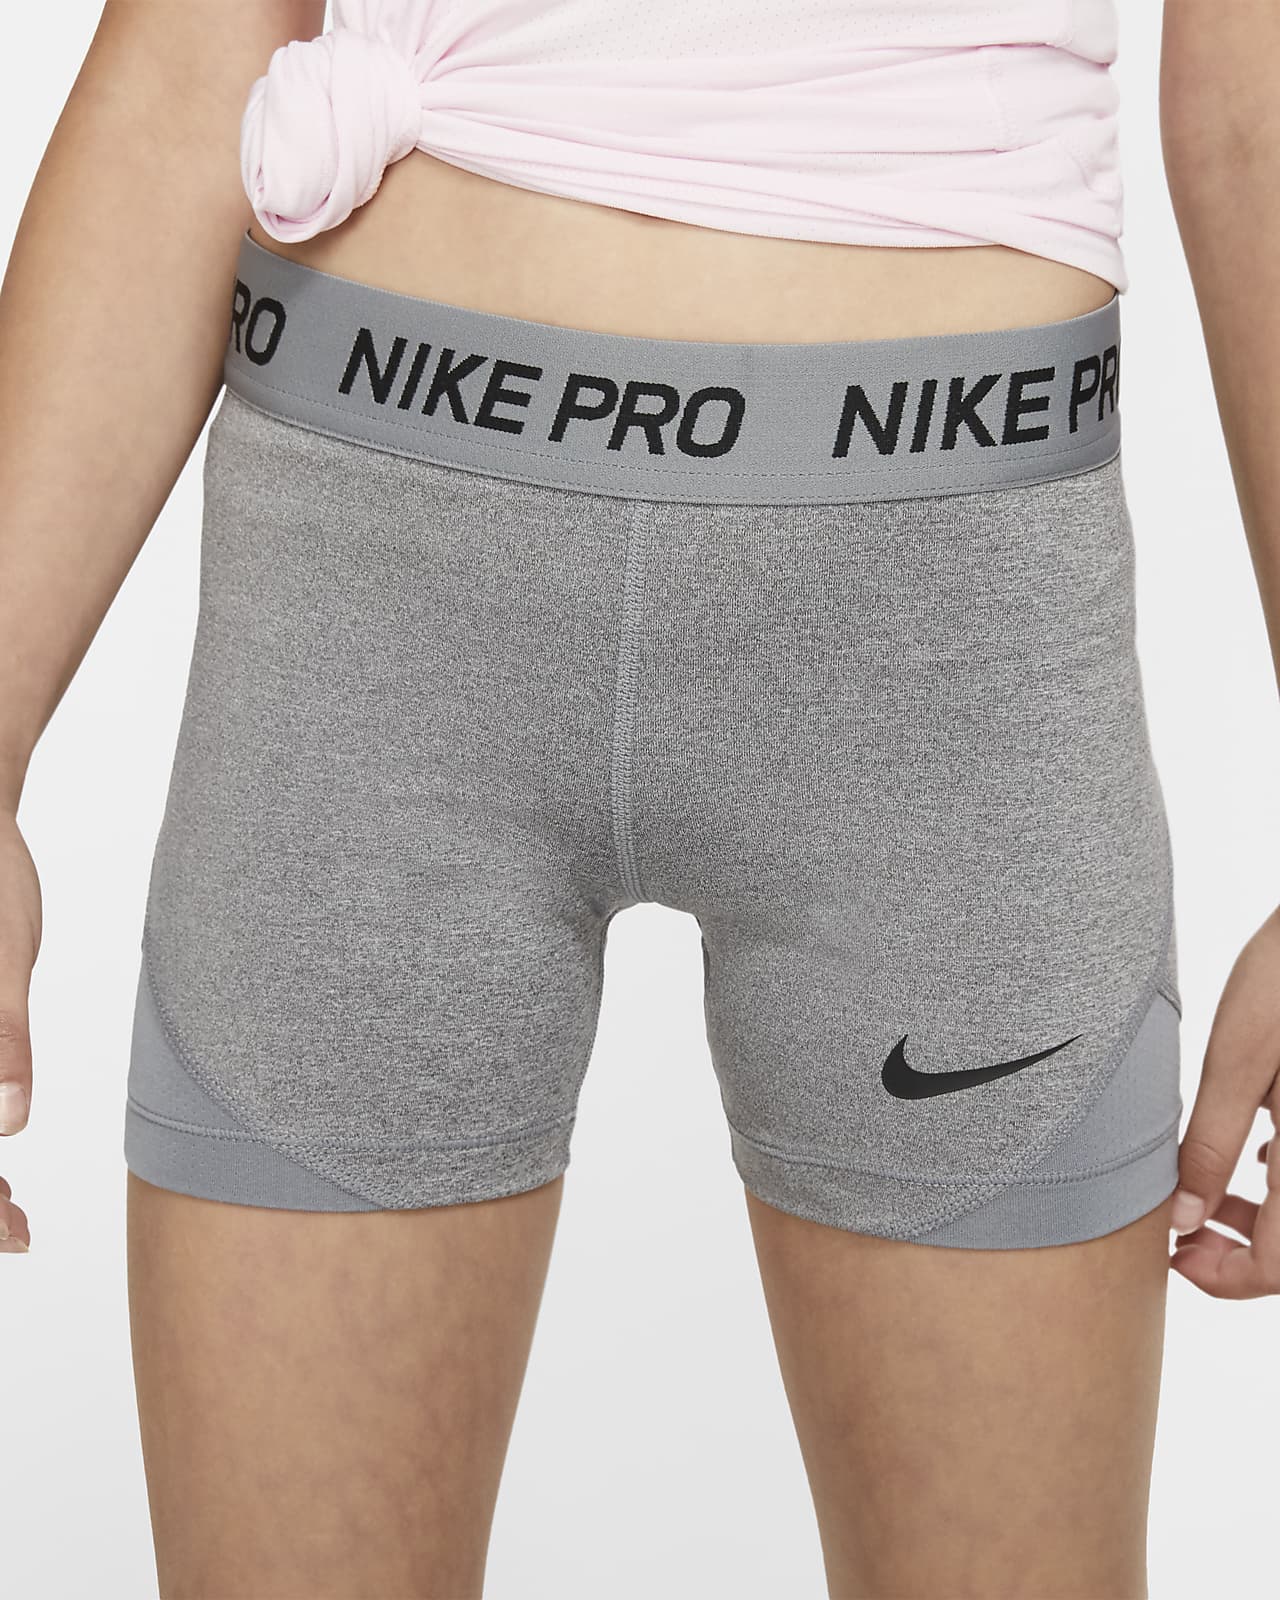 Culote para niña talla grande Nike Pro. Nike.com